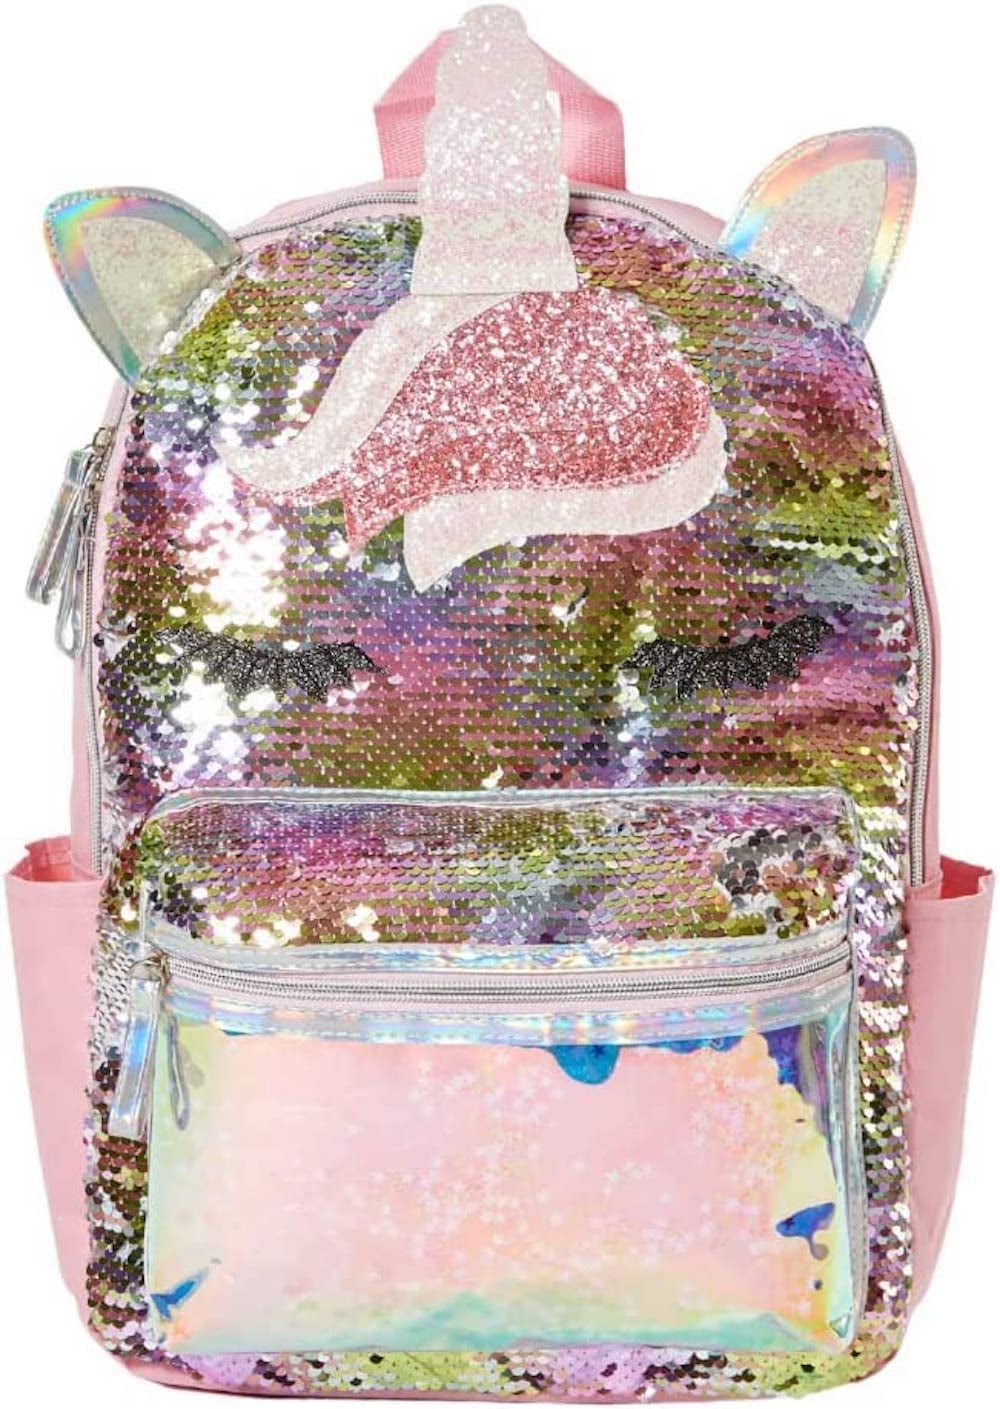 Cutetitos Unicornitos, Rainbow 🌈Swirl Unicorn🦄 New in Bag, Walmart  Exclusive | eBay